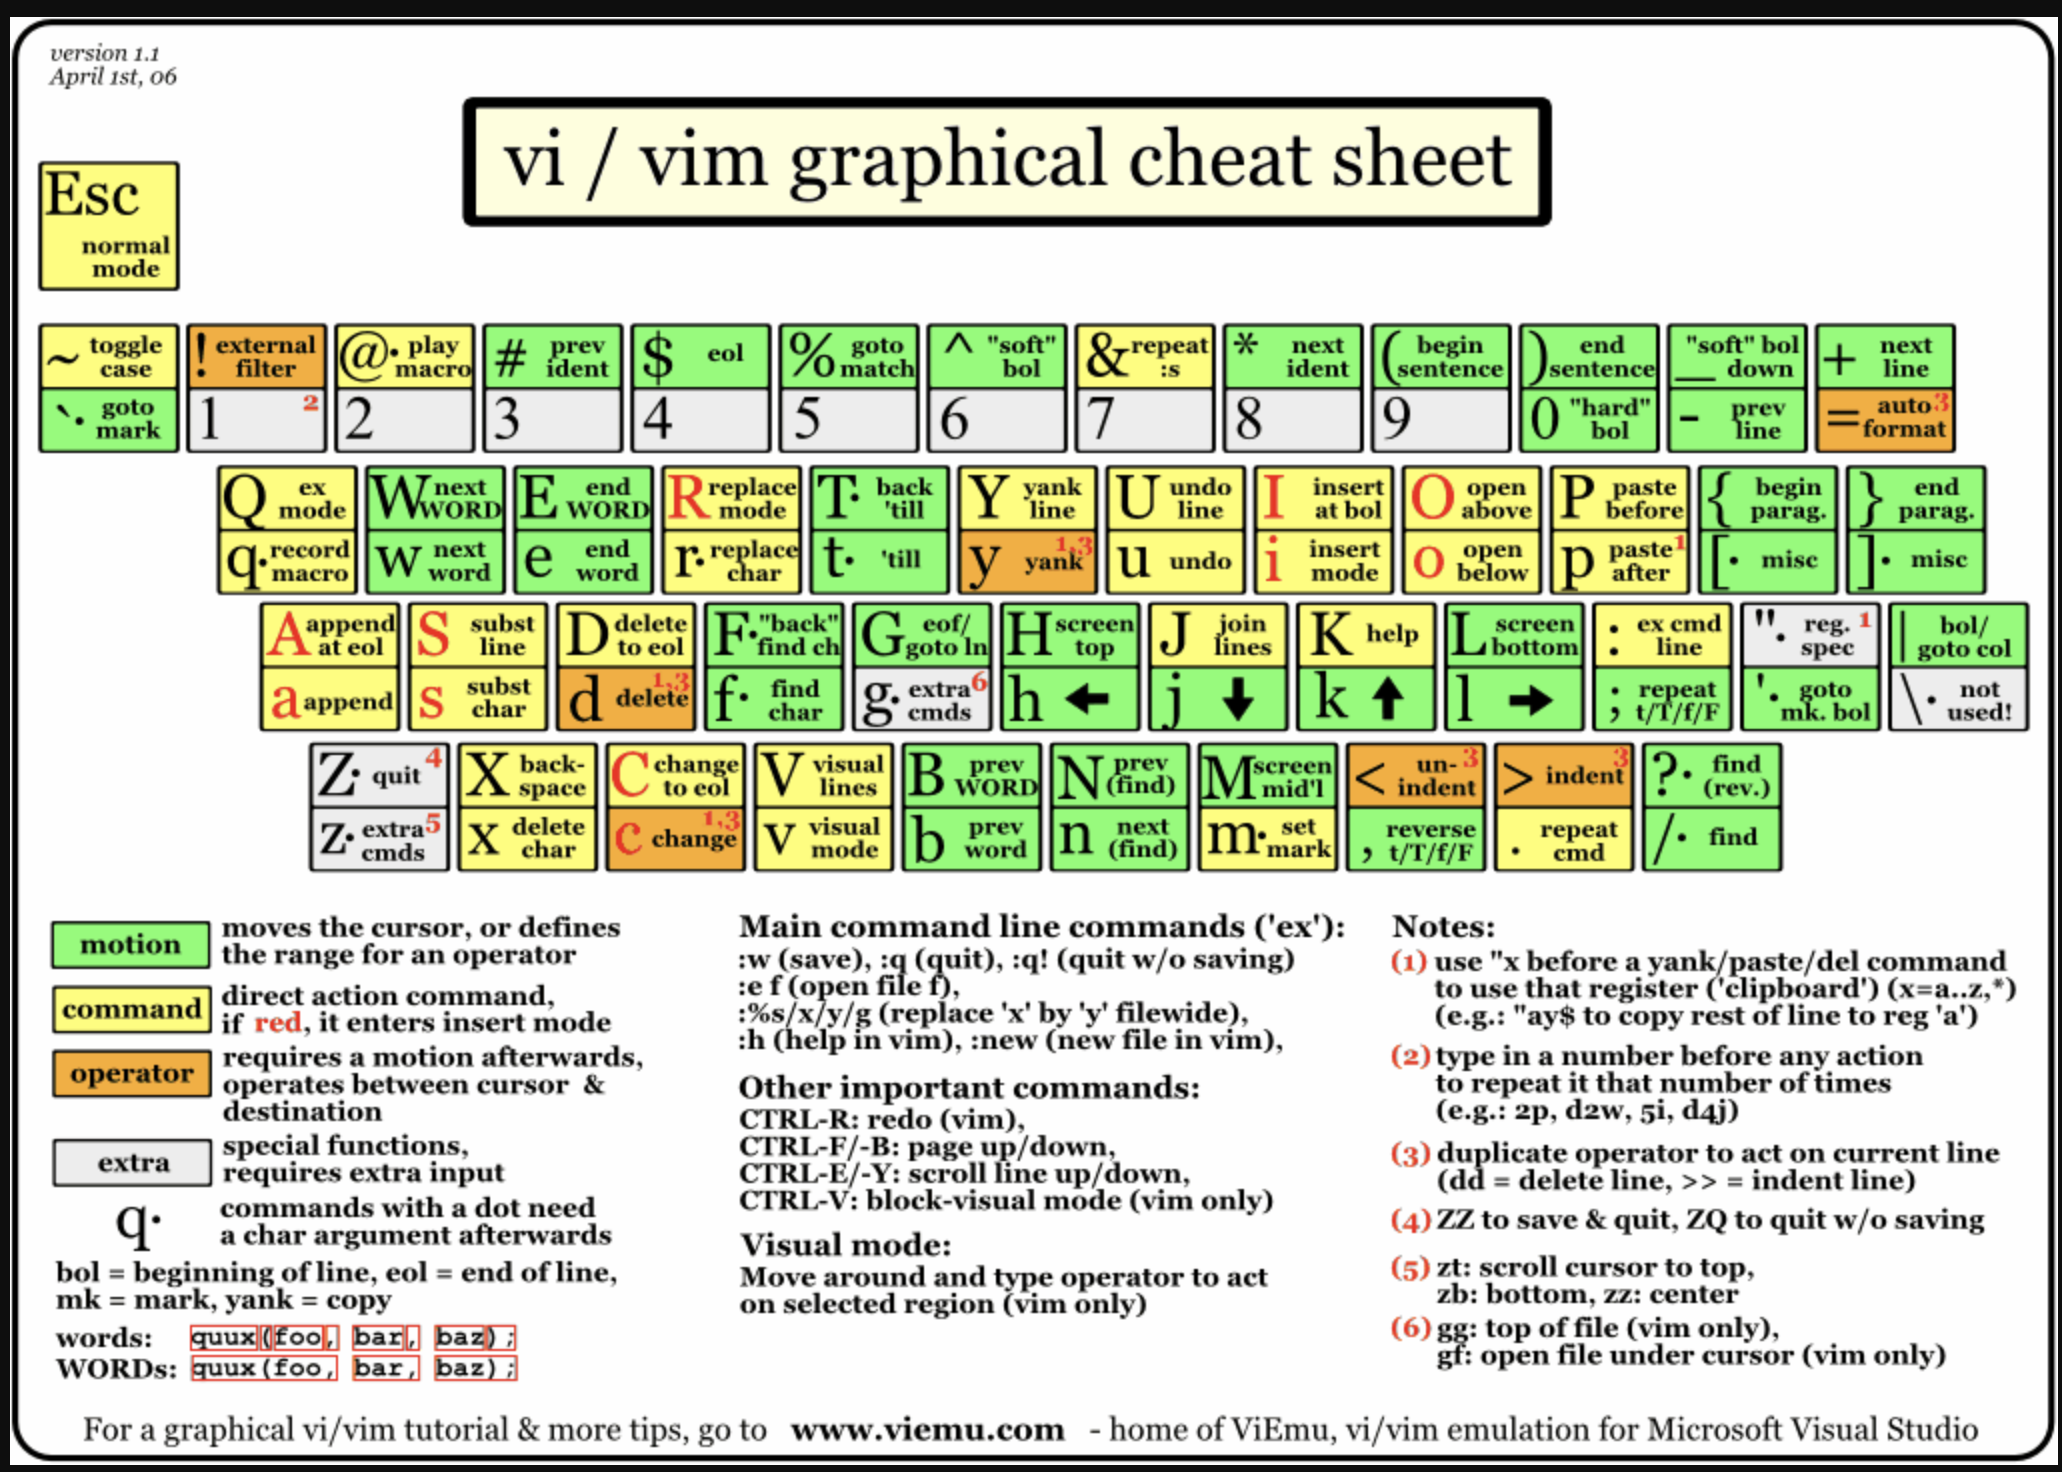 cheat sheet